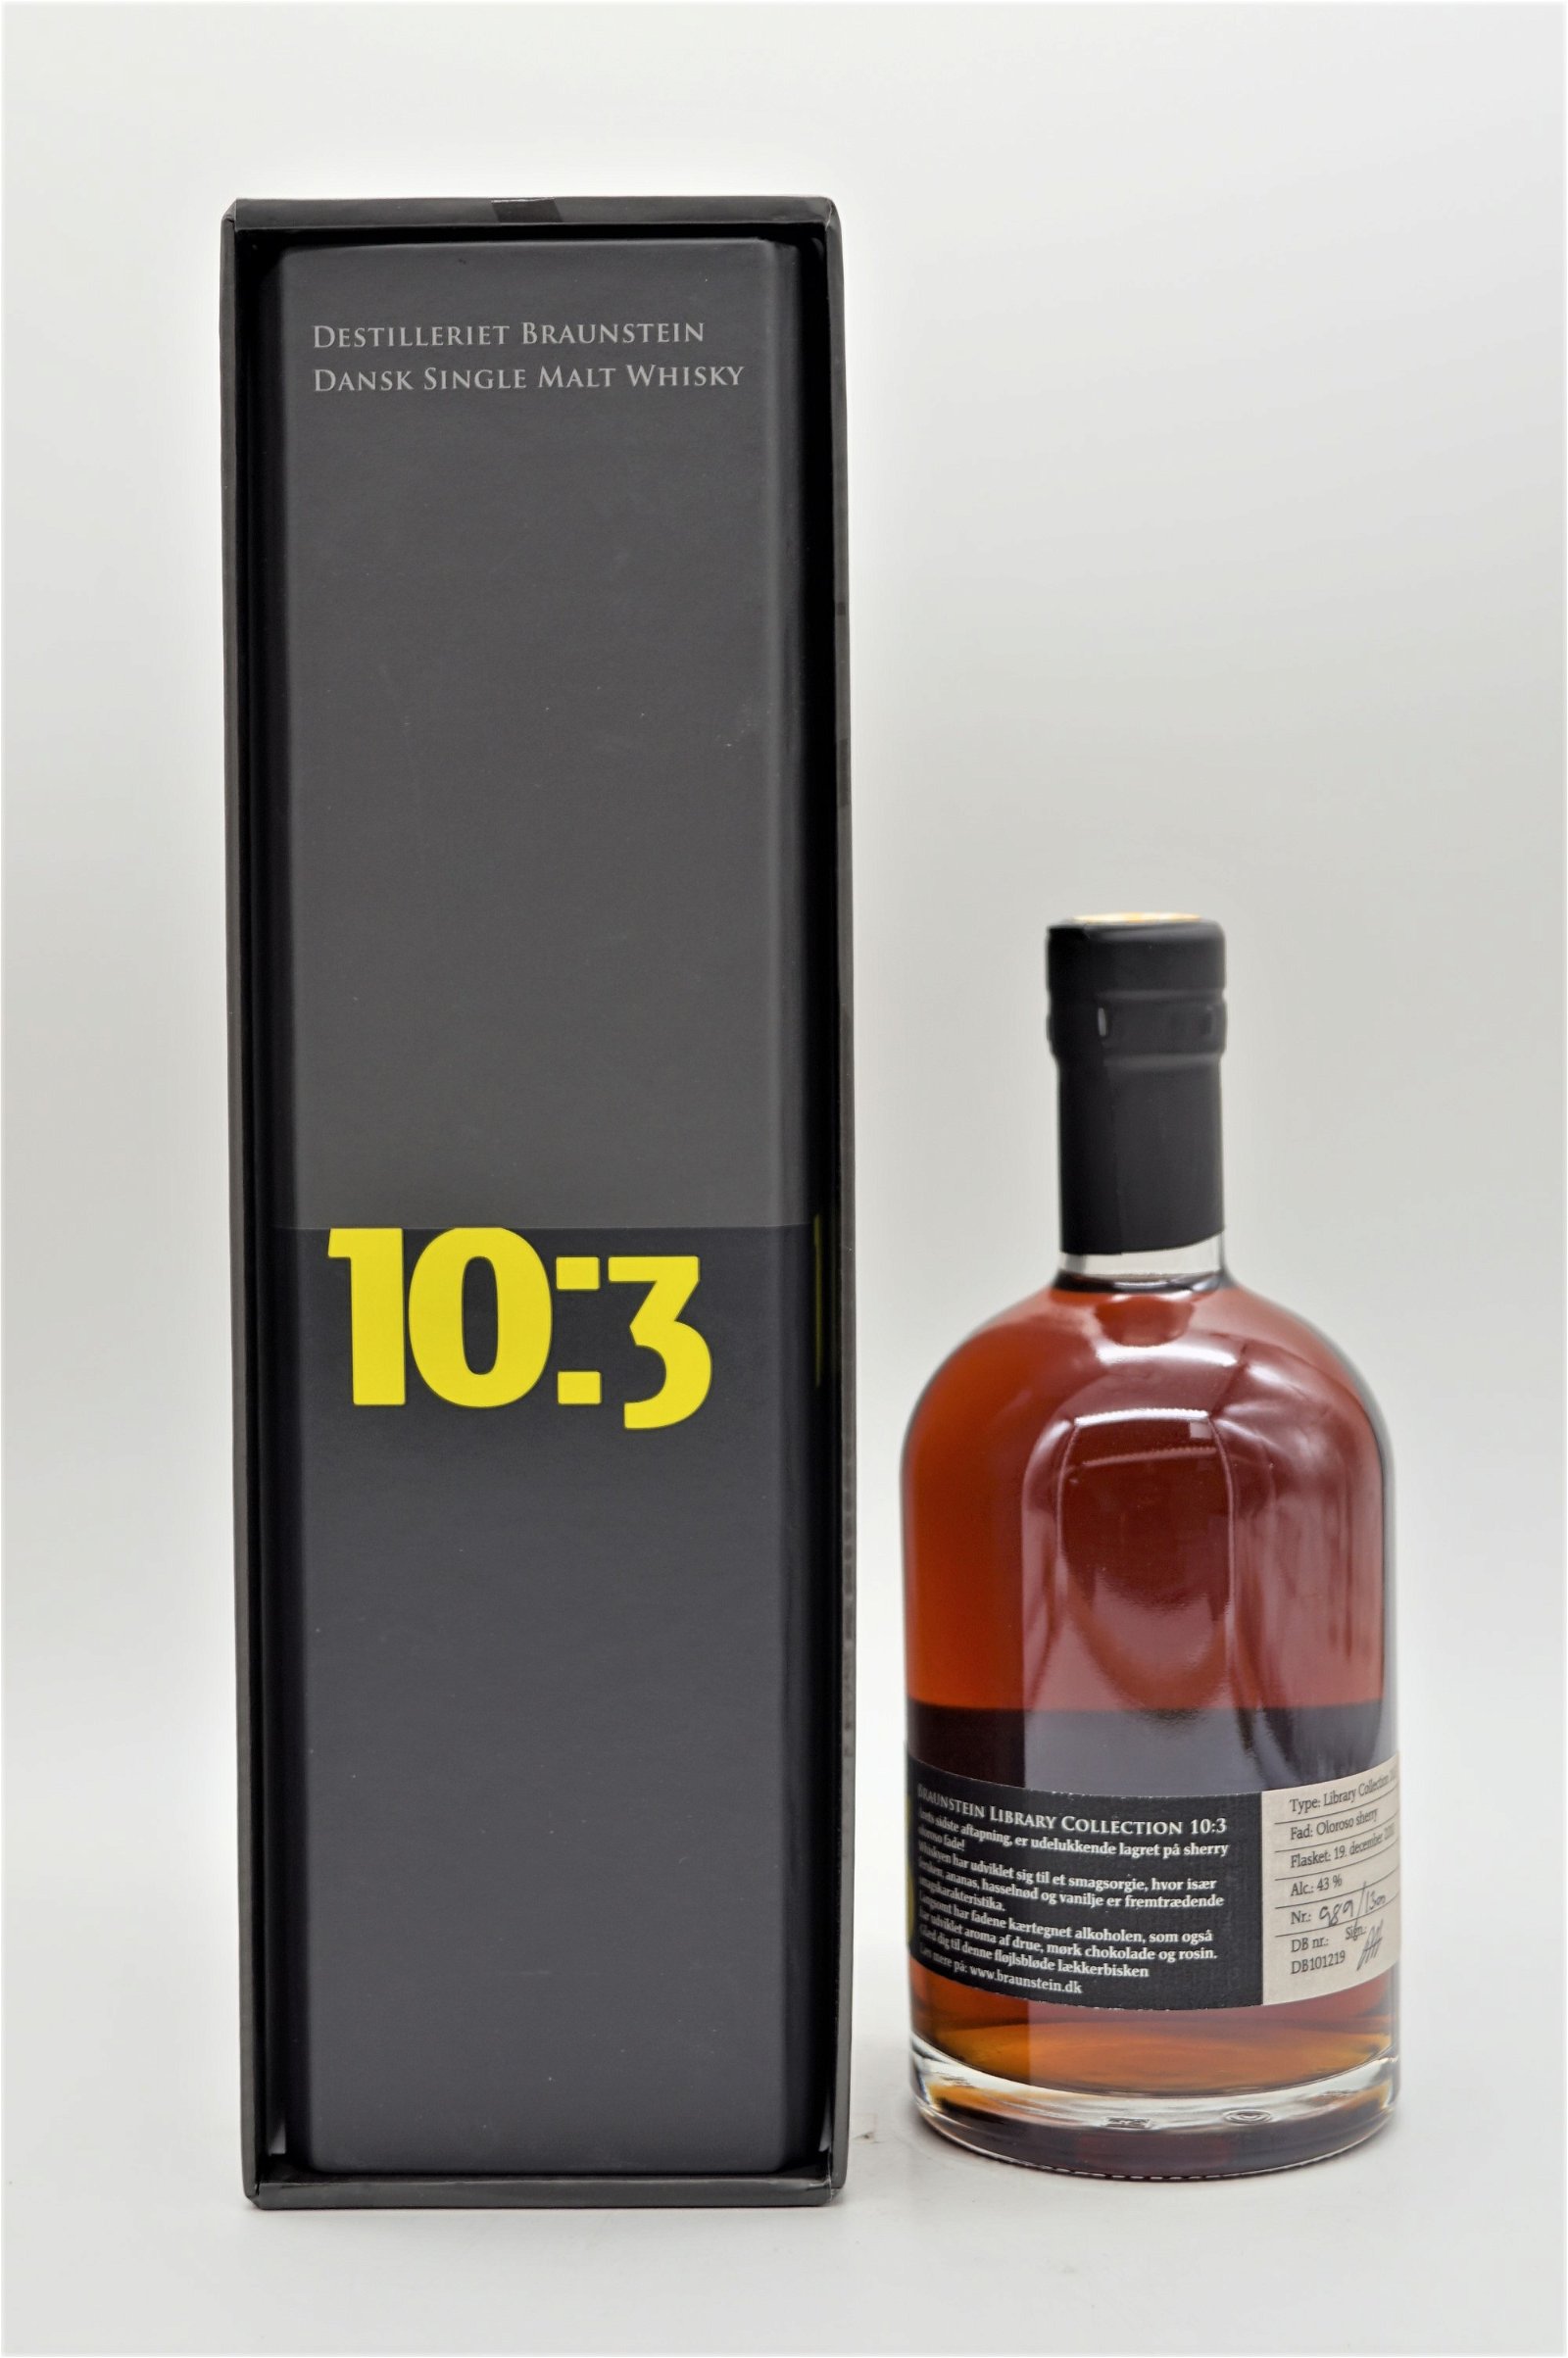 Braunstein Libary Collection 10:3 Dansk Single Malt Whisky